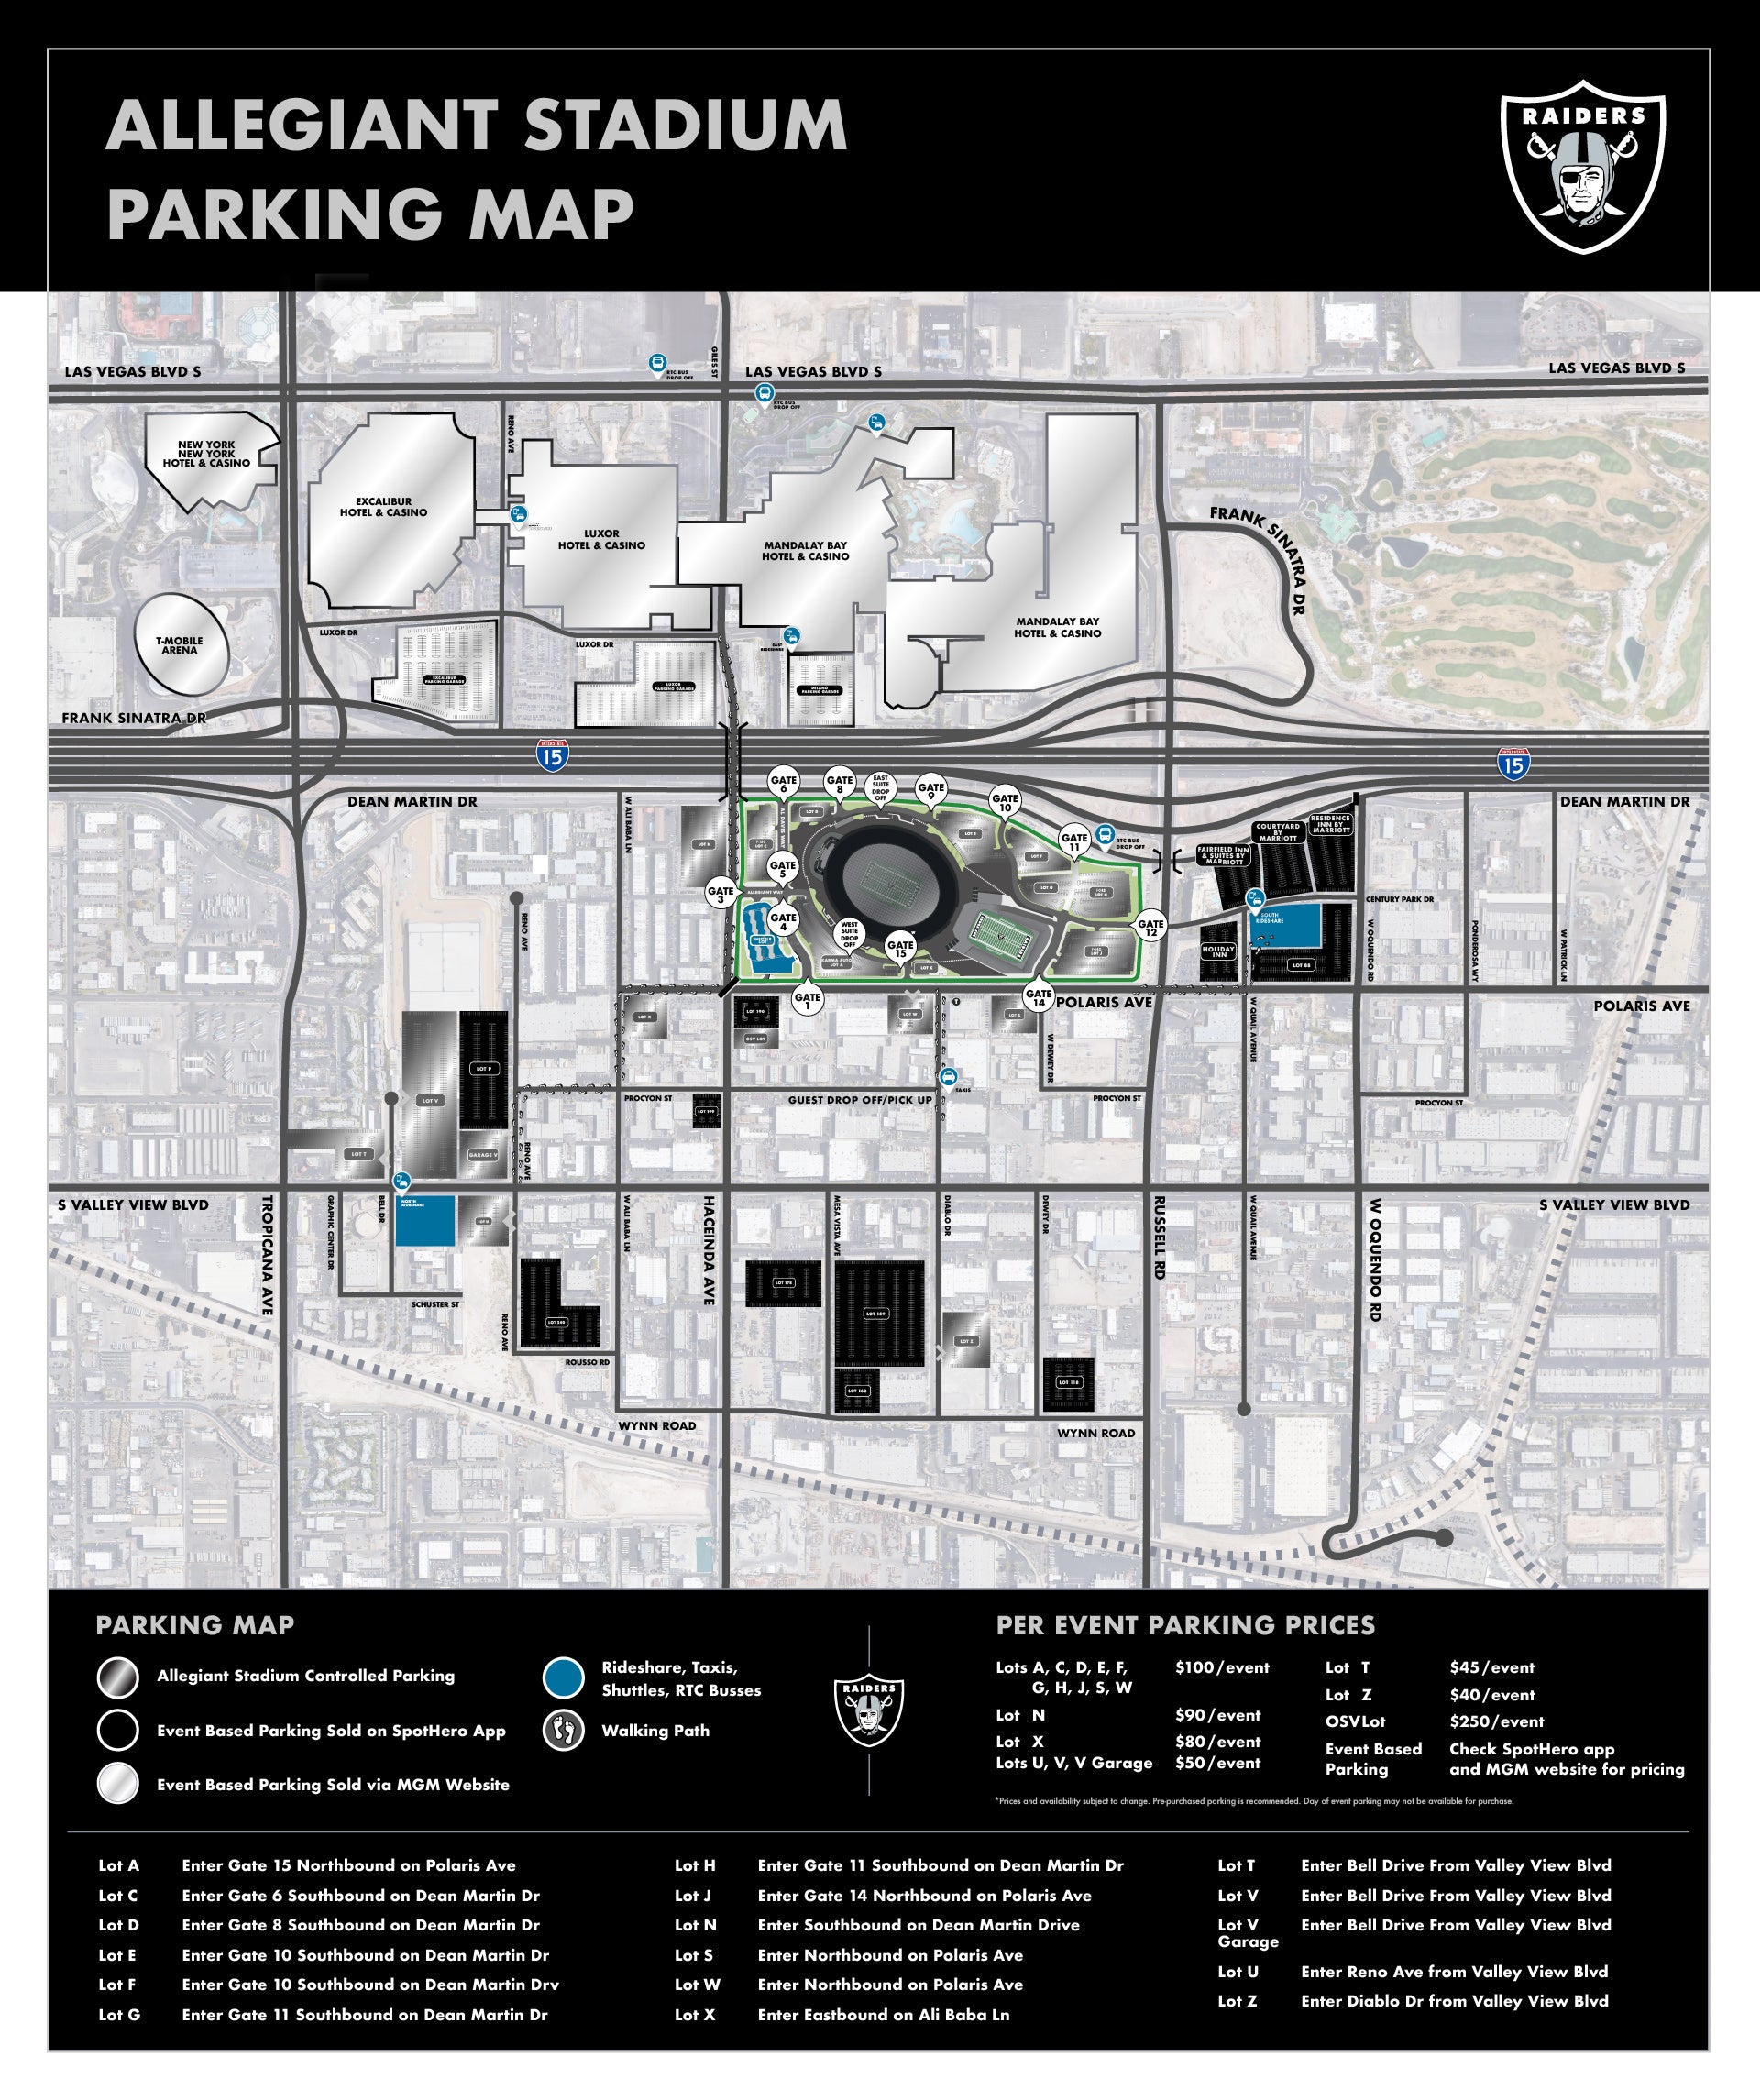 Mandalay Bay Property Map & Floor Plans - Las Vegas